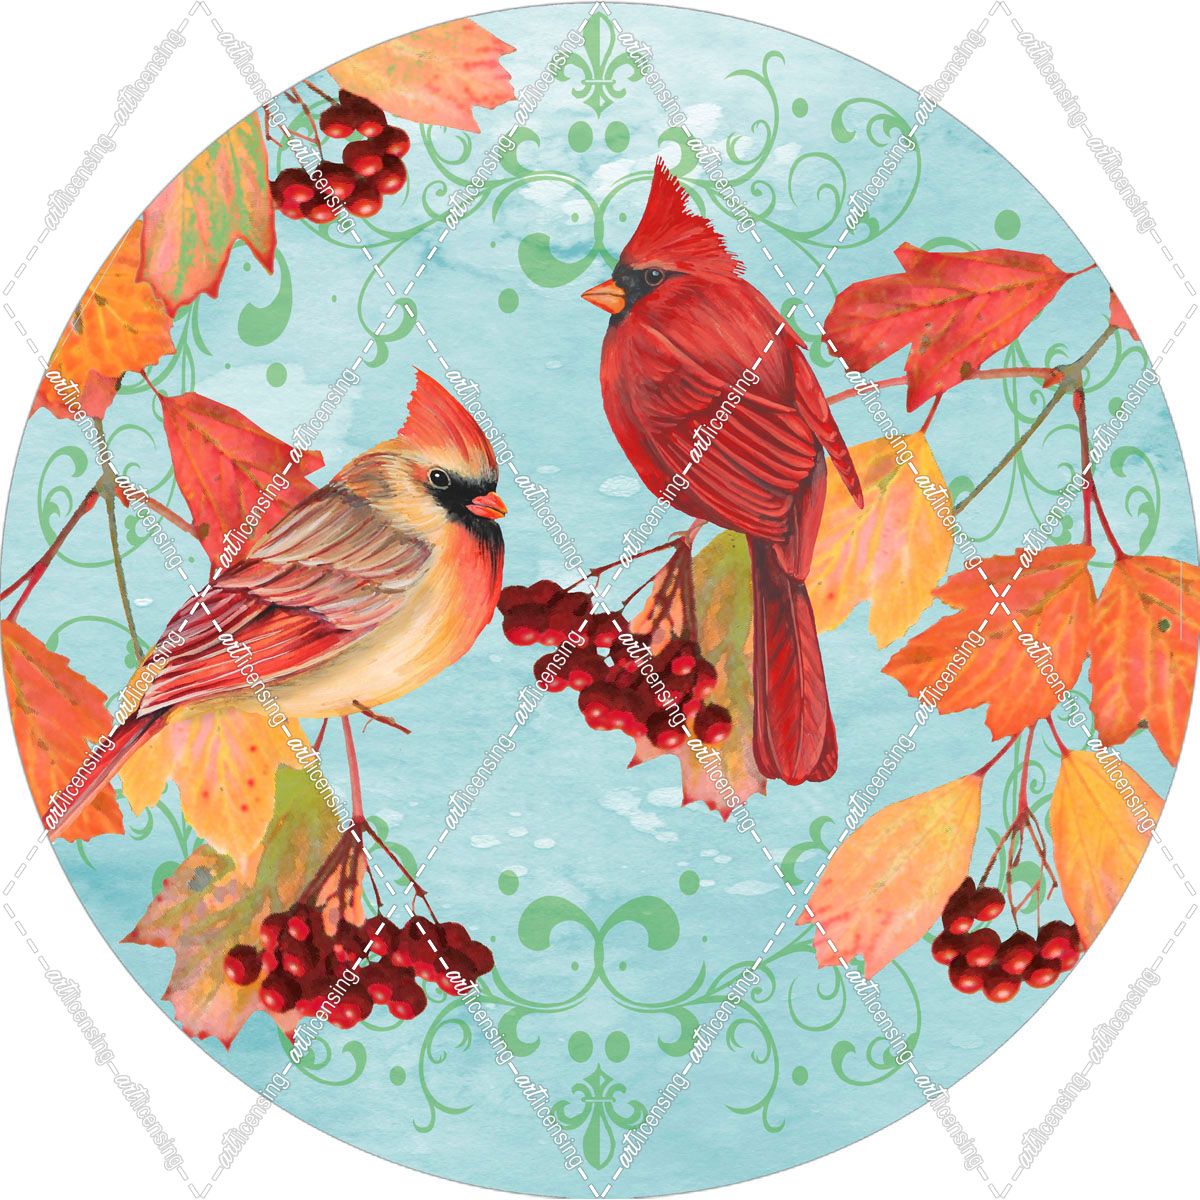 Jp2885_Cardinals In Fall-Dinner Plate